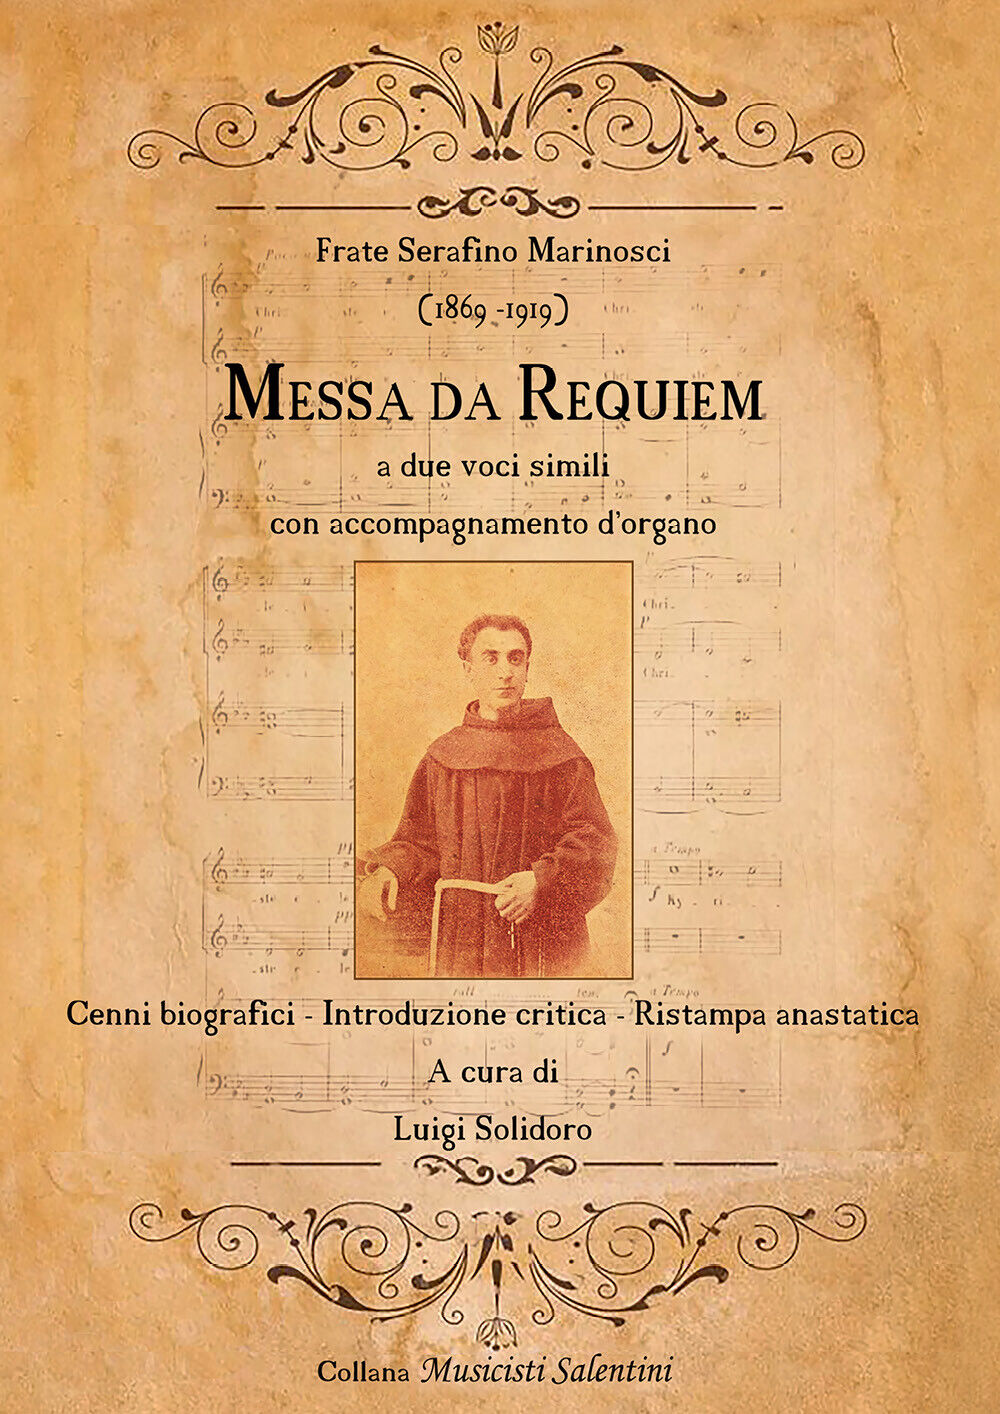 Frate Serafino Marinosci (1869 - 1919): Messa da Requiem. Cenni biografici - Int